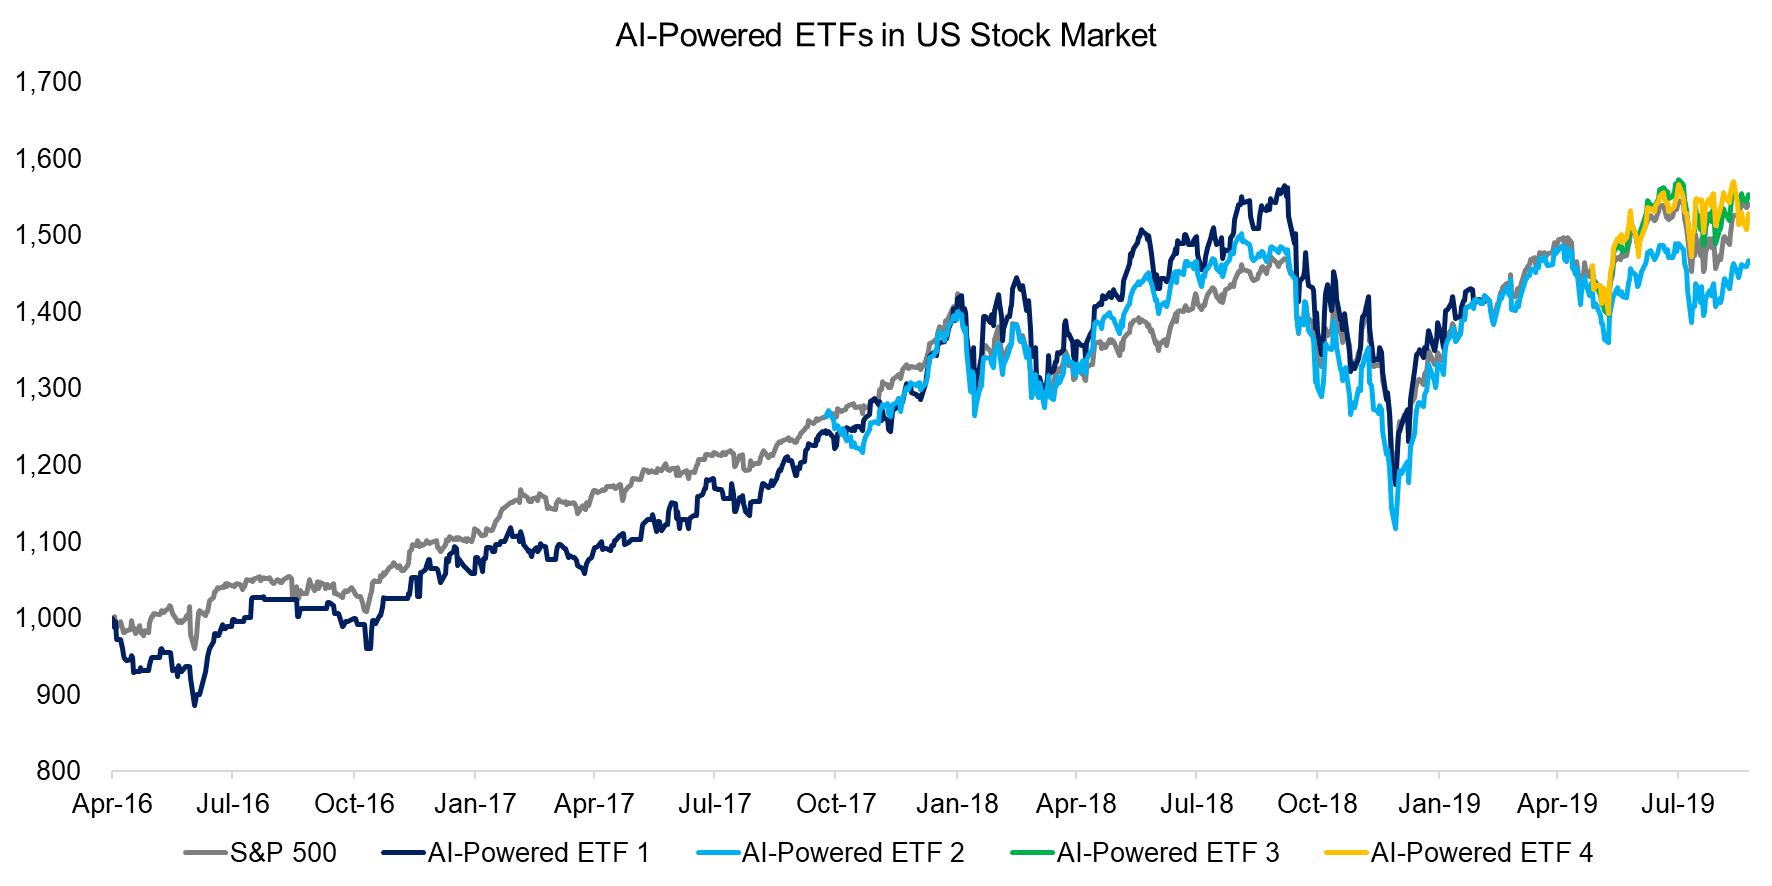 AI-Powered ETFs in US Stock Market